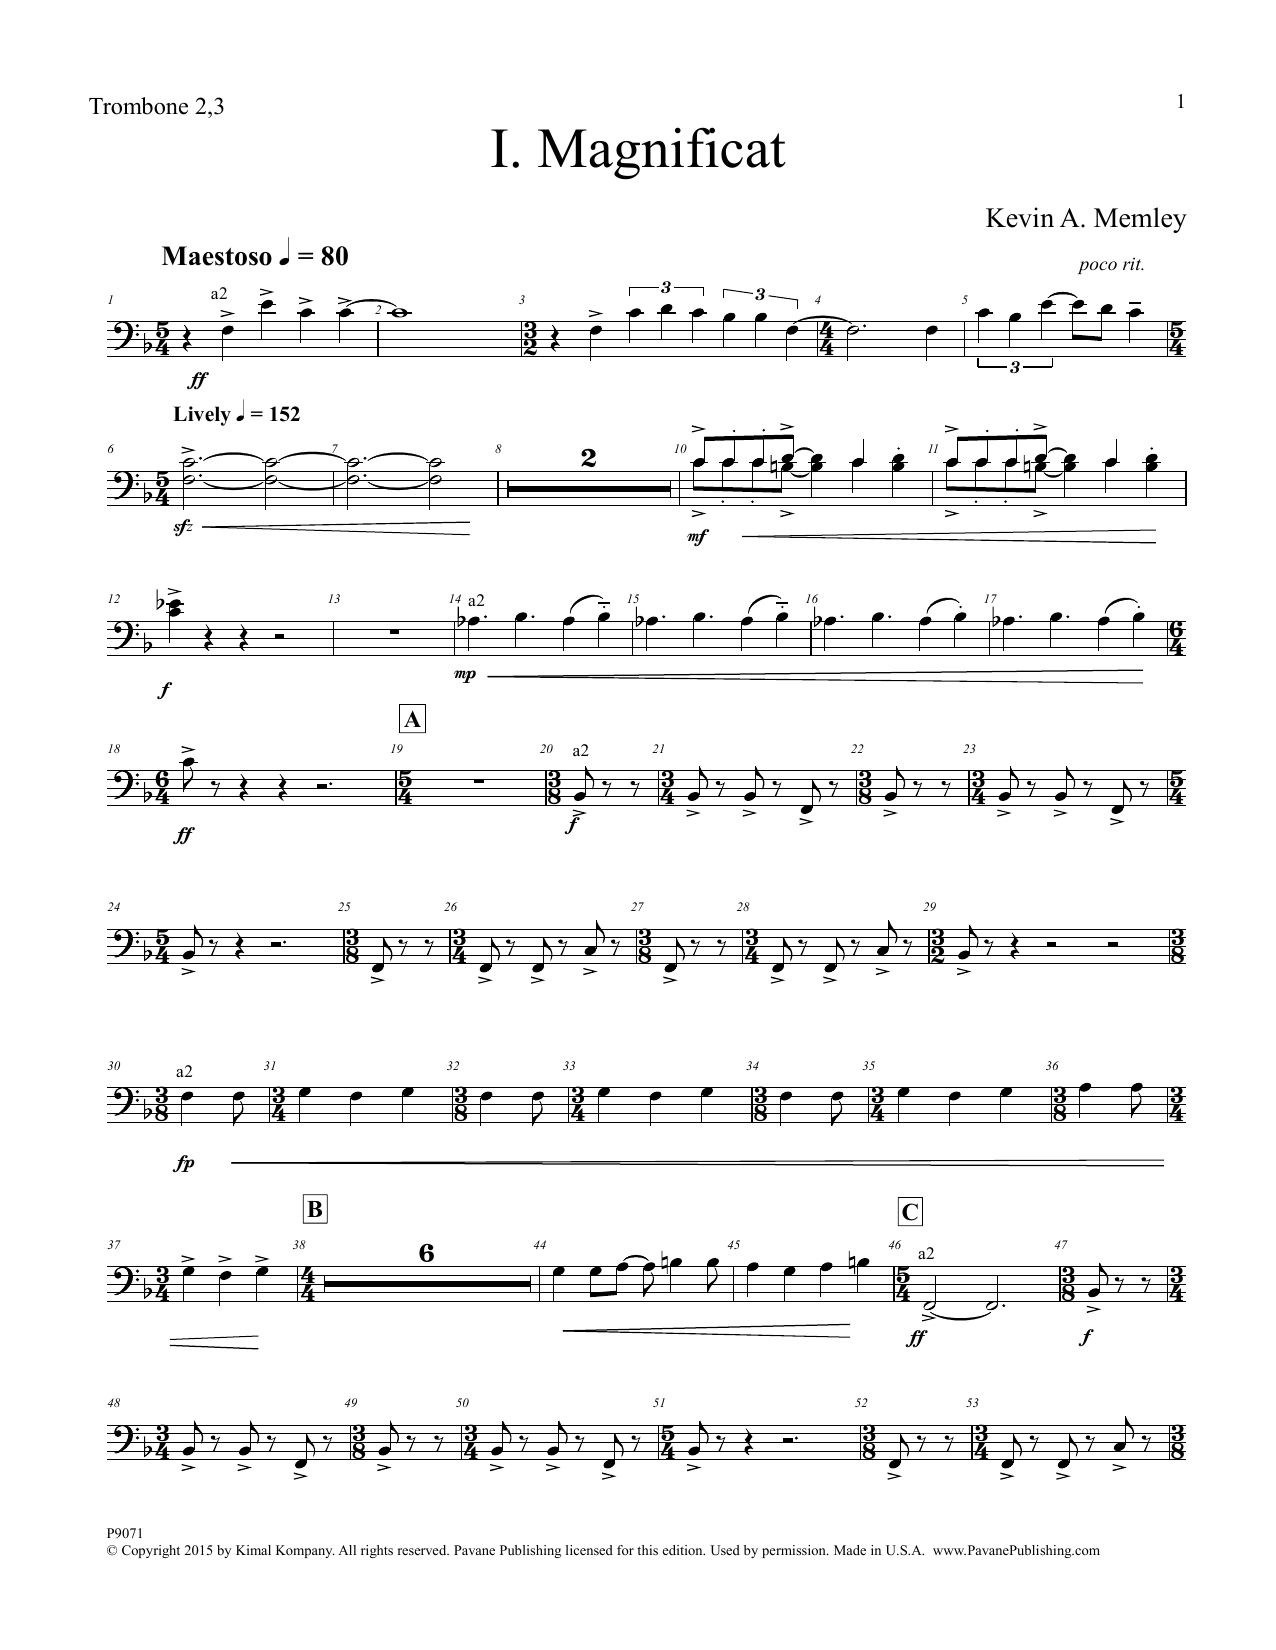 Download Kevin A. Memley Magnificat - Trombone 2 & 3 Sheet Music